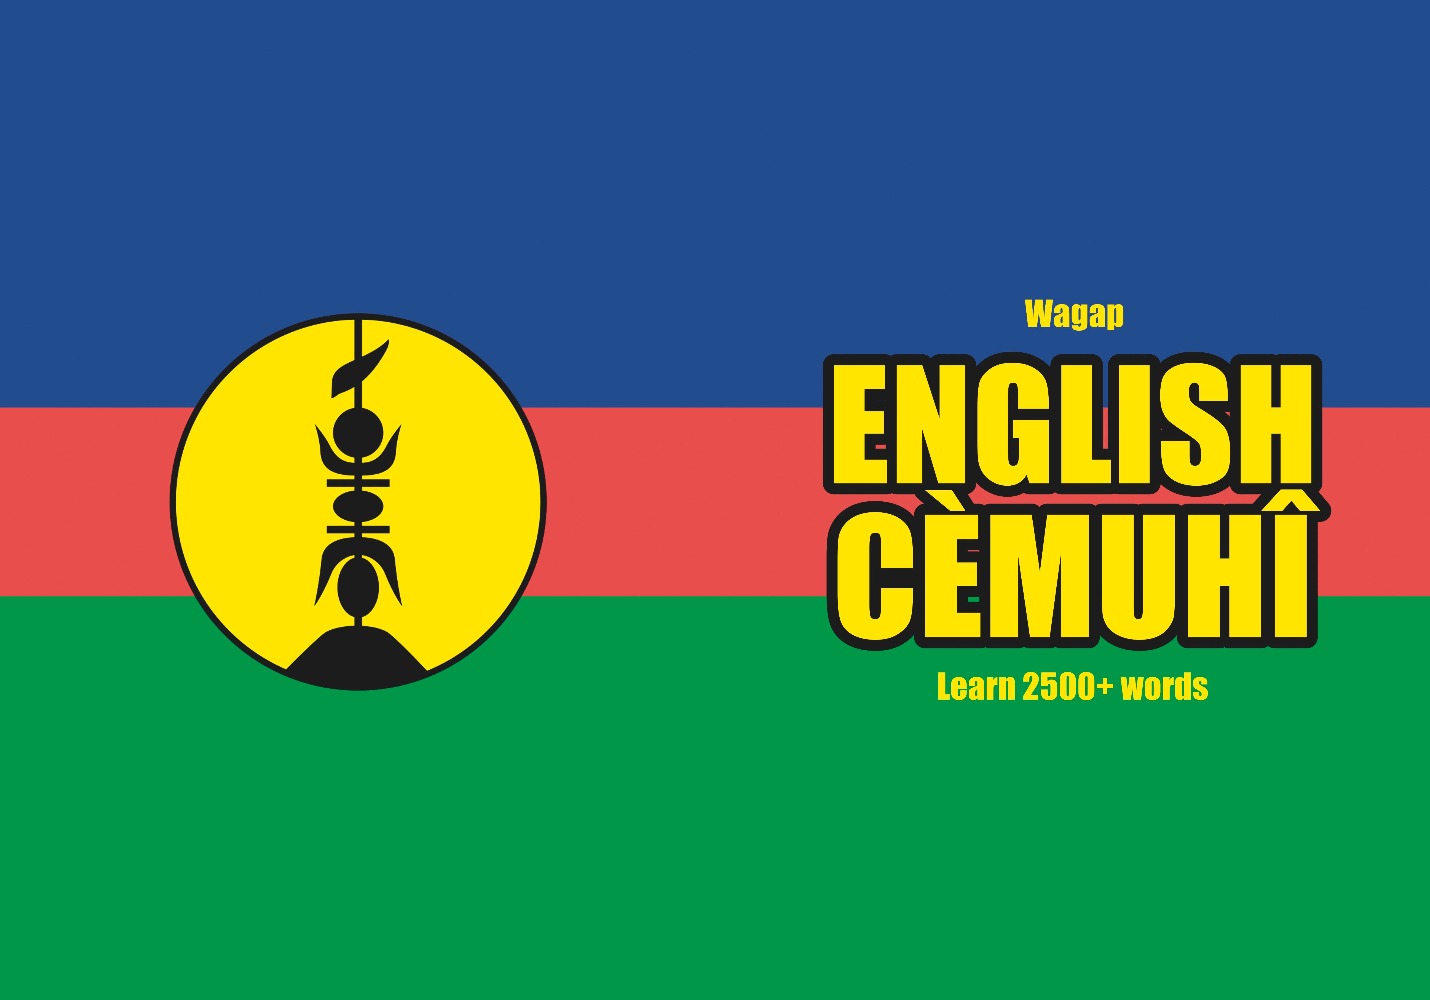 Cèmuhî language learning notebook cover